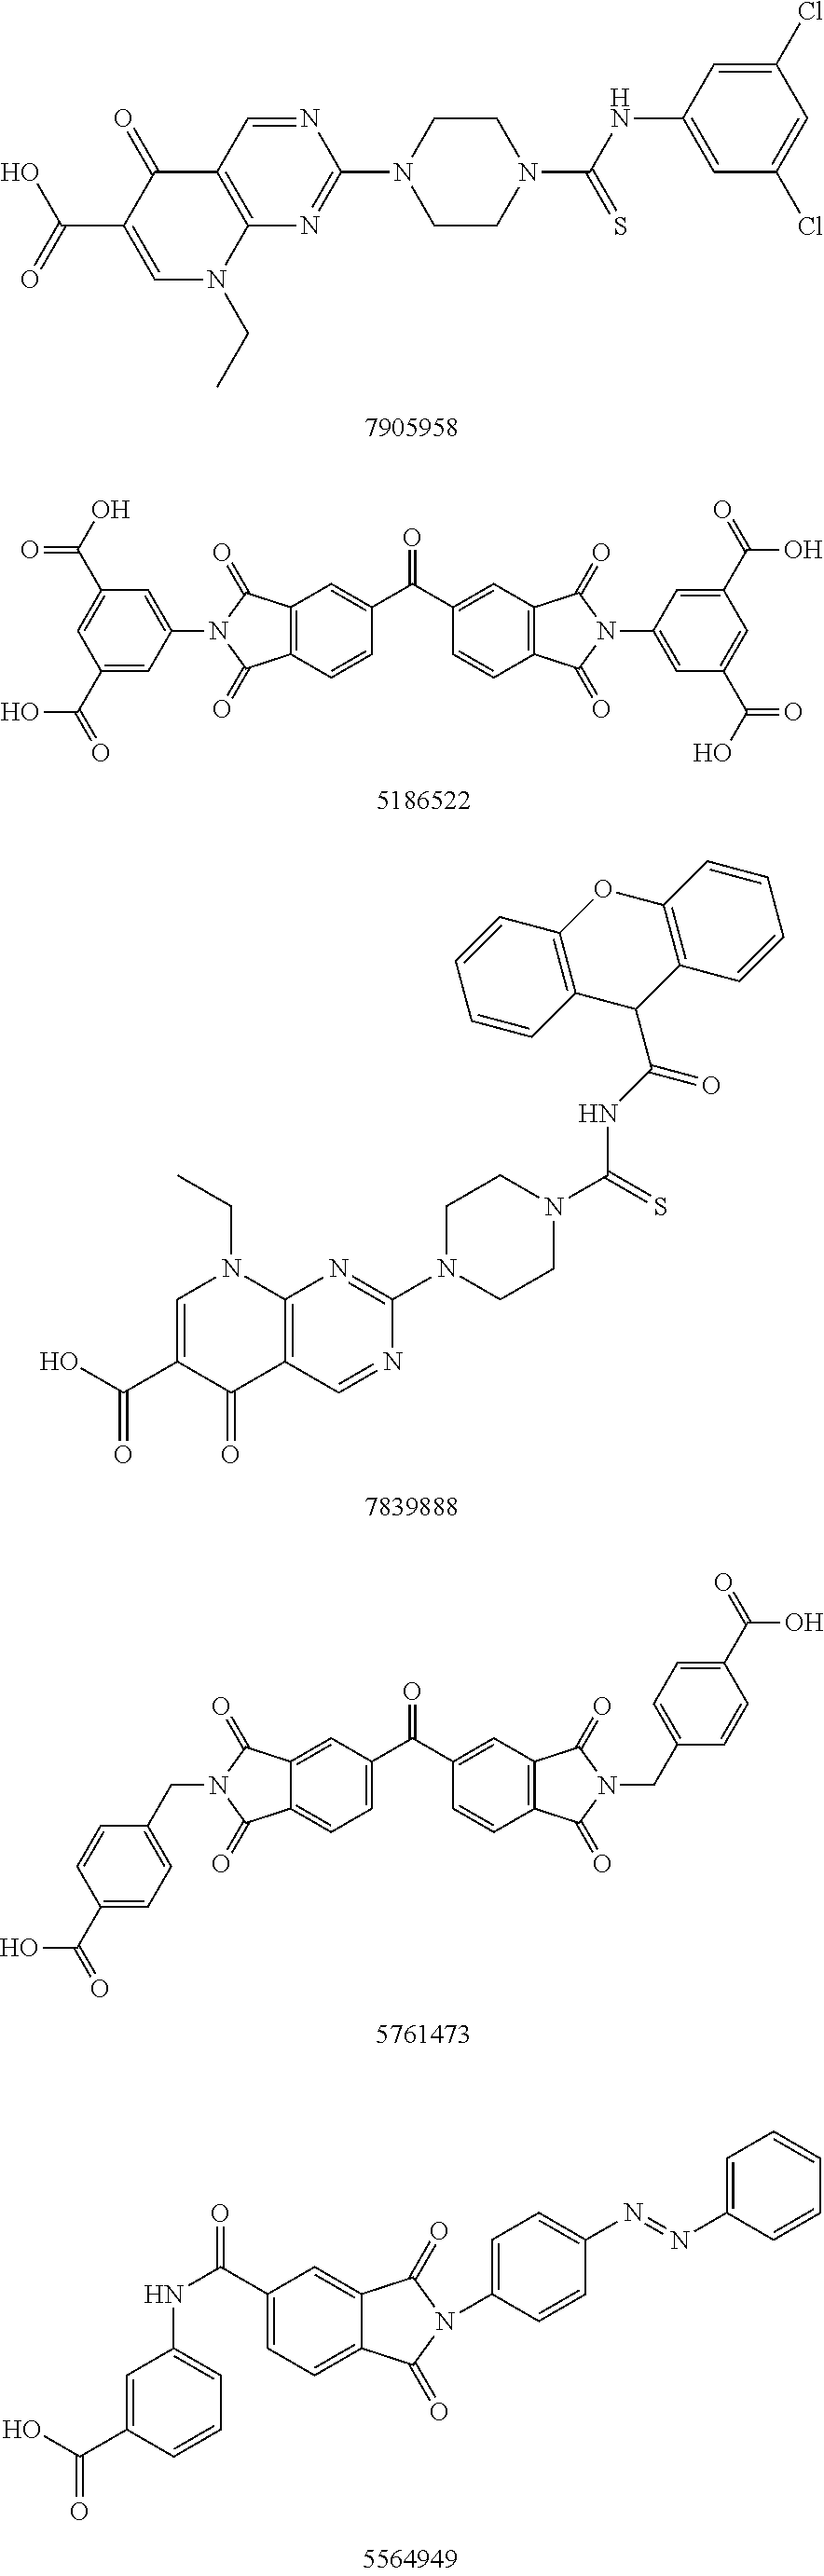 Autotaxin inhibitors